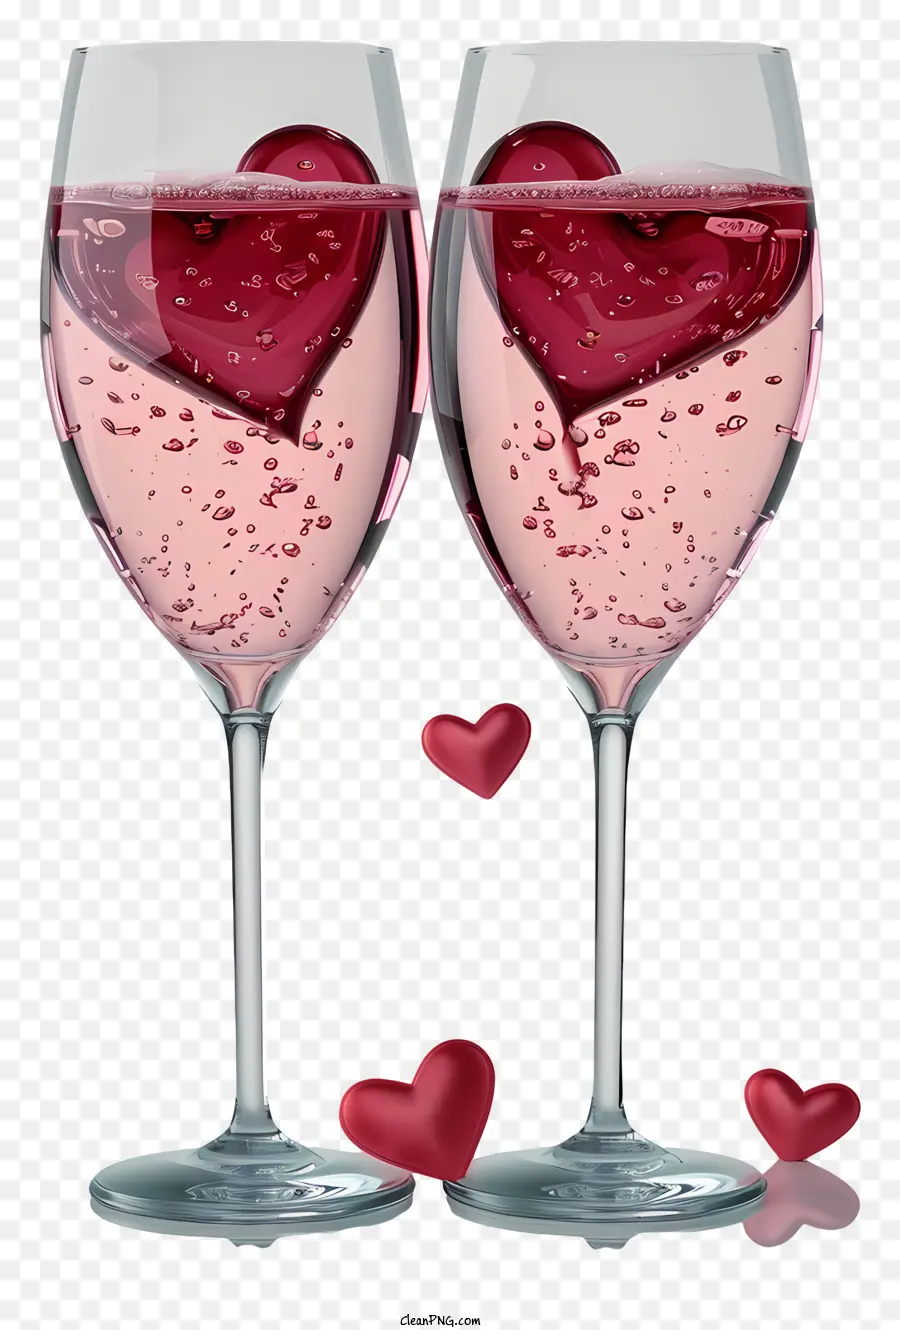 valentine wine glasses illustrate wine glasses hearts pink liquid heart-shaped droplets